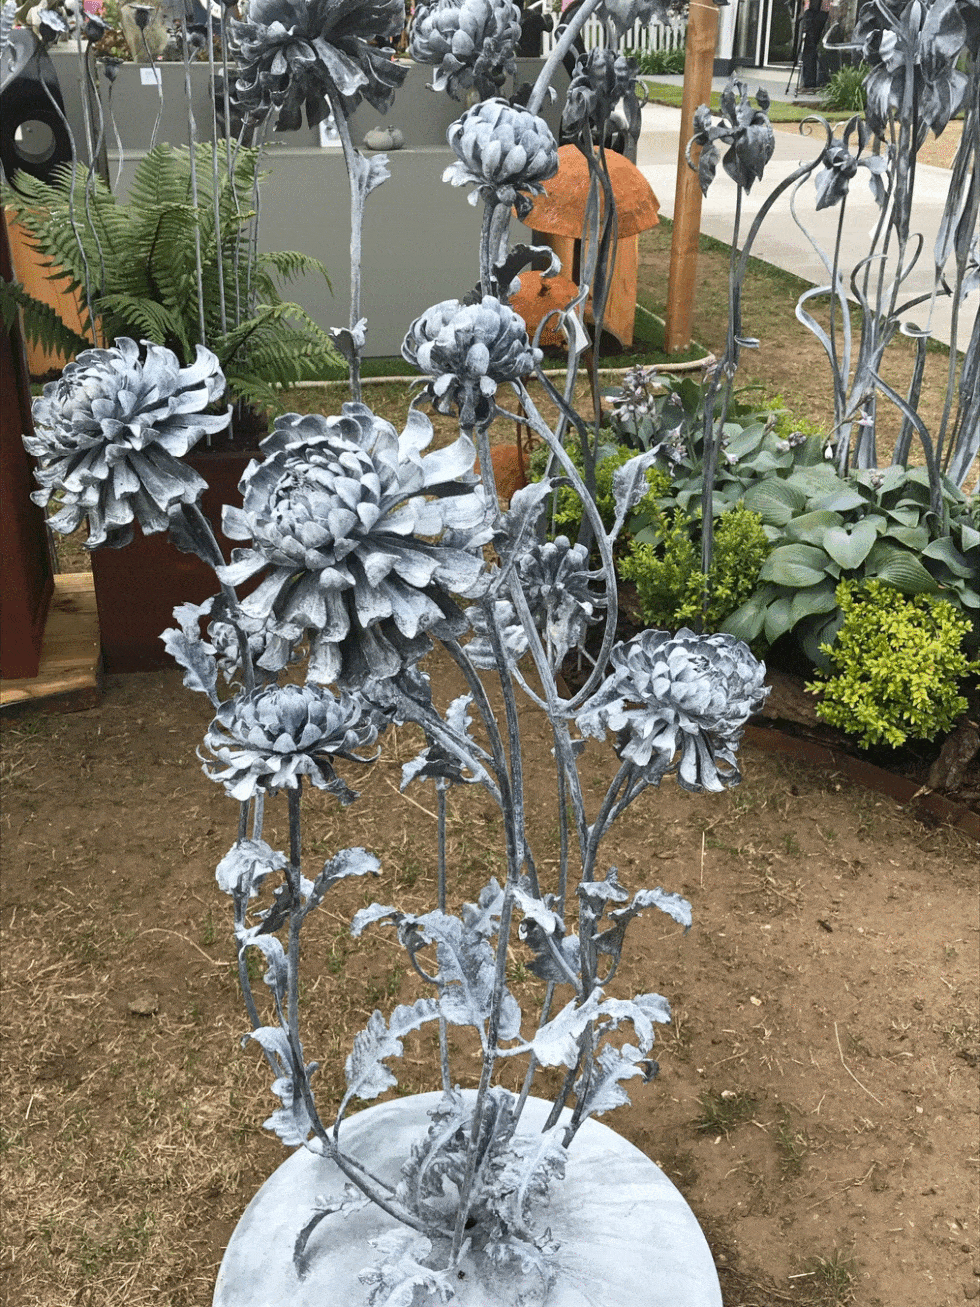 Garden/outdoor sculpture at the 2017 RHS Hampton Court Palace Flower Show